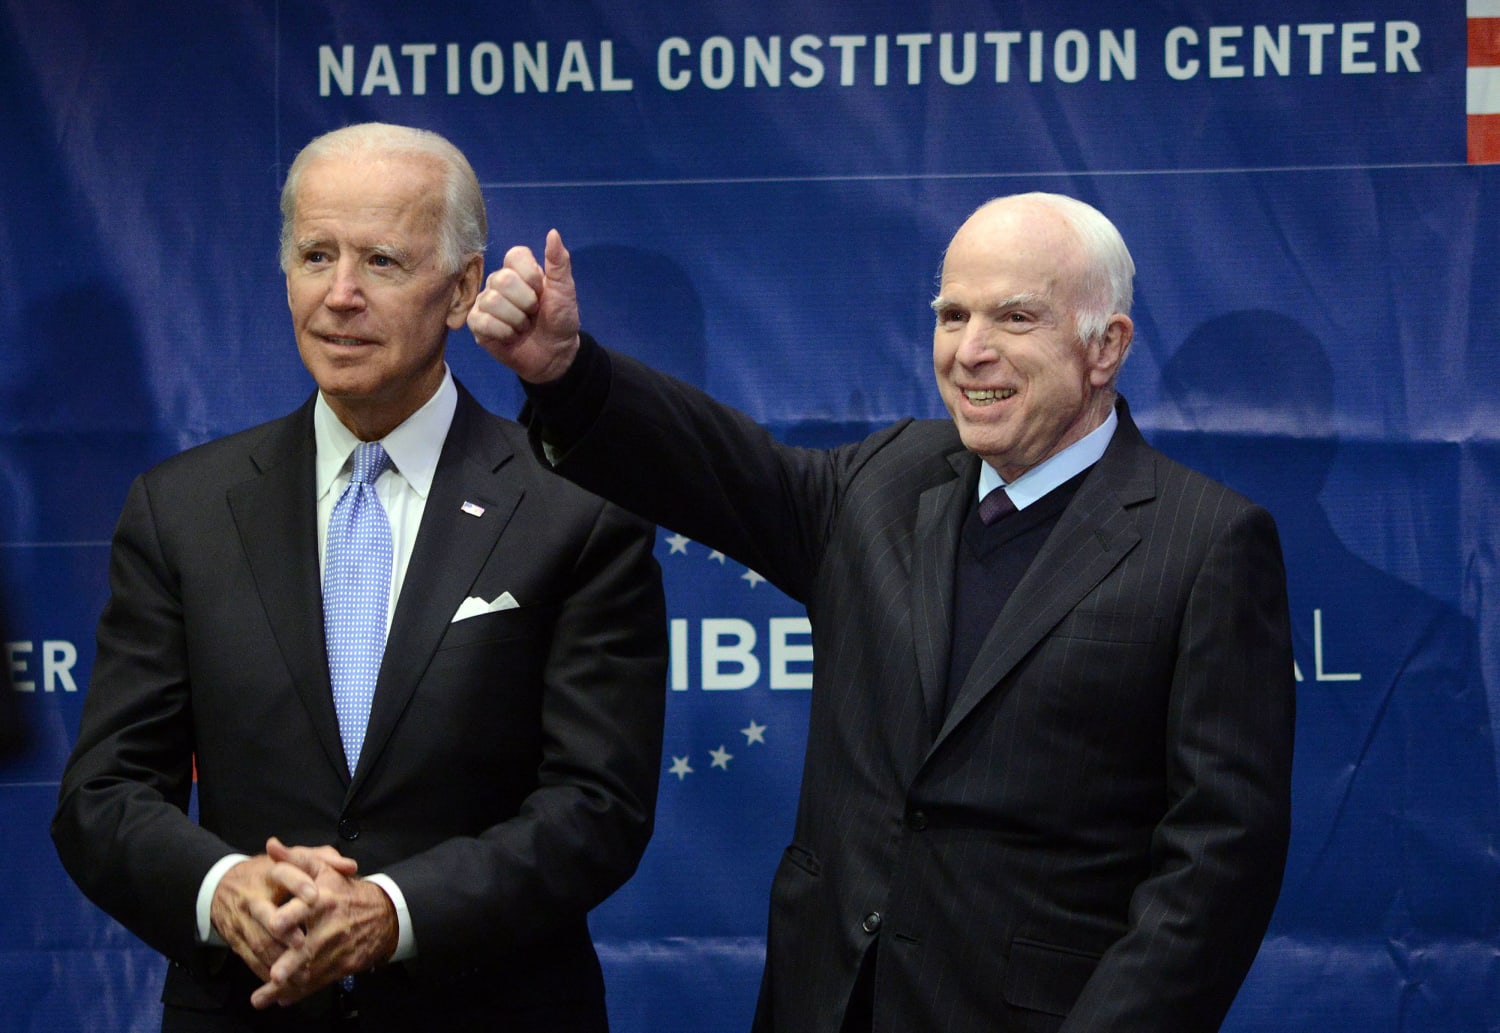 Joe salutes his 'brother' John McCain in moving